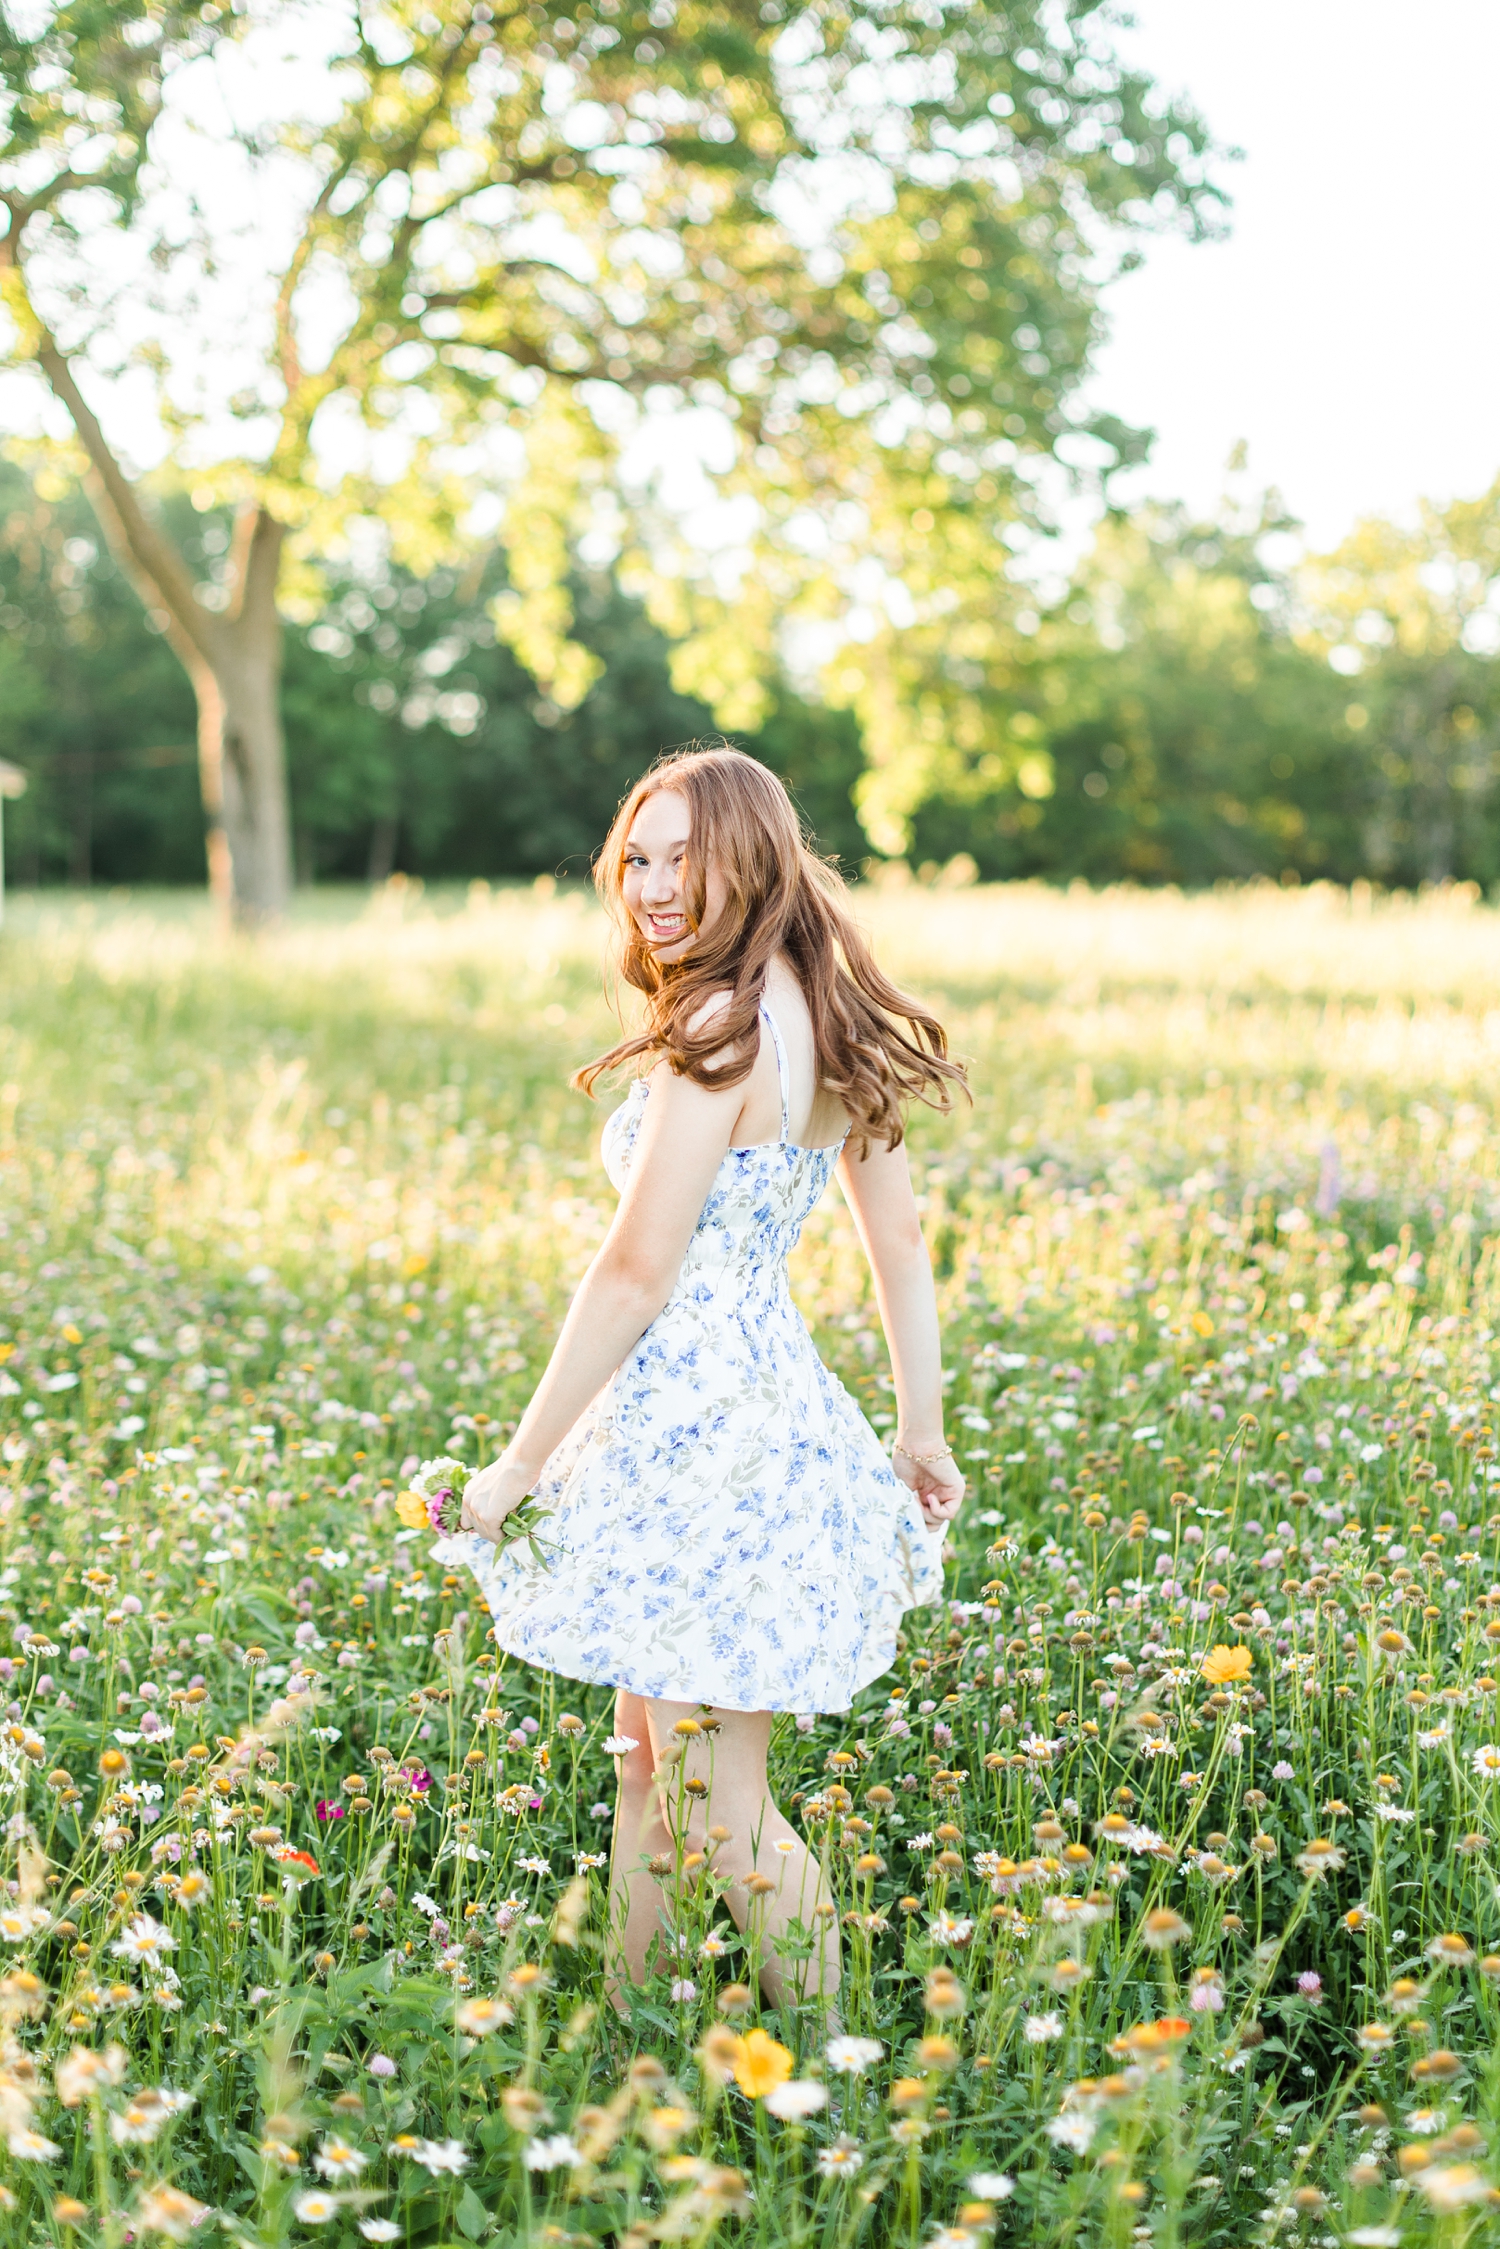 Savannah dances in a field of wildflowers | CB Studio